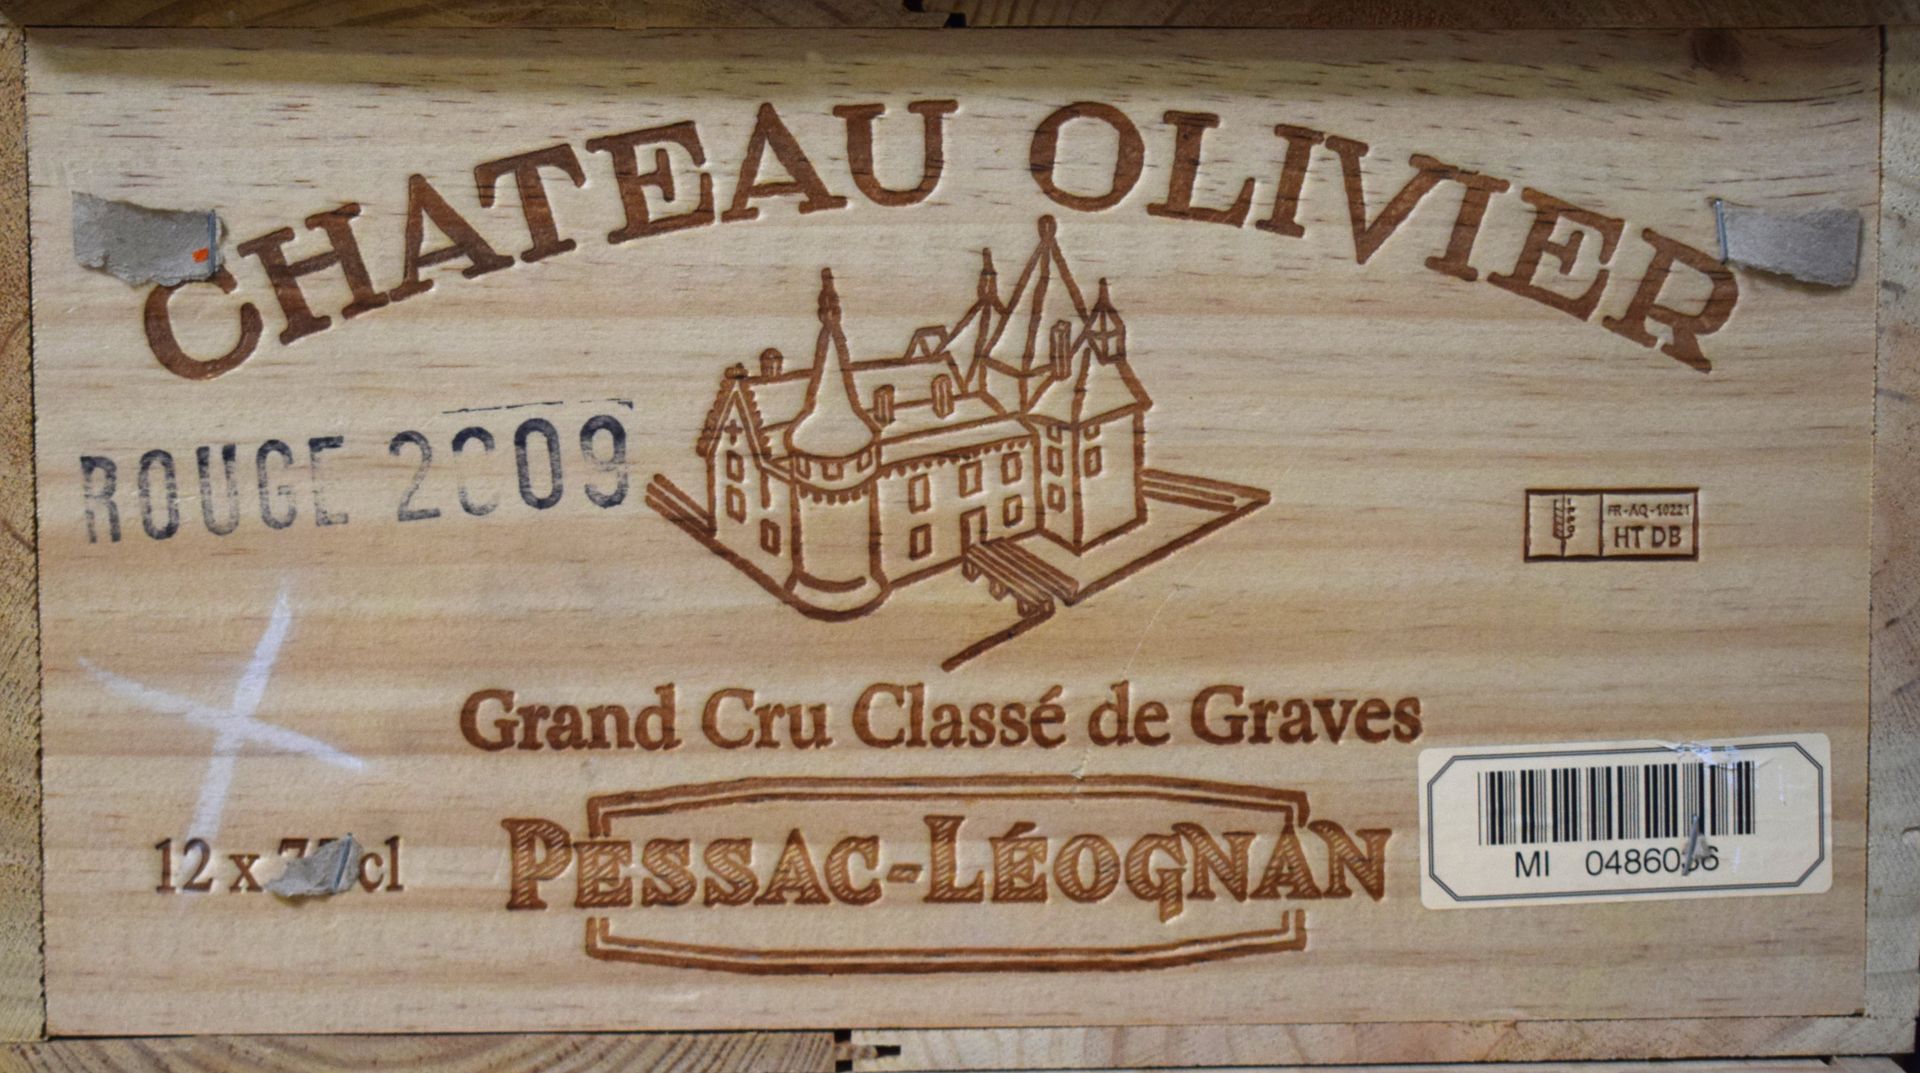 Null (PESSAC-LÉOGNAN) En estuche de madera, lote de 12 botellas de Château OLIVI&hellip;